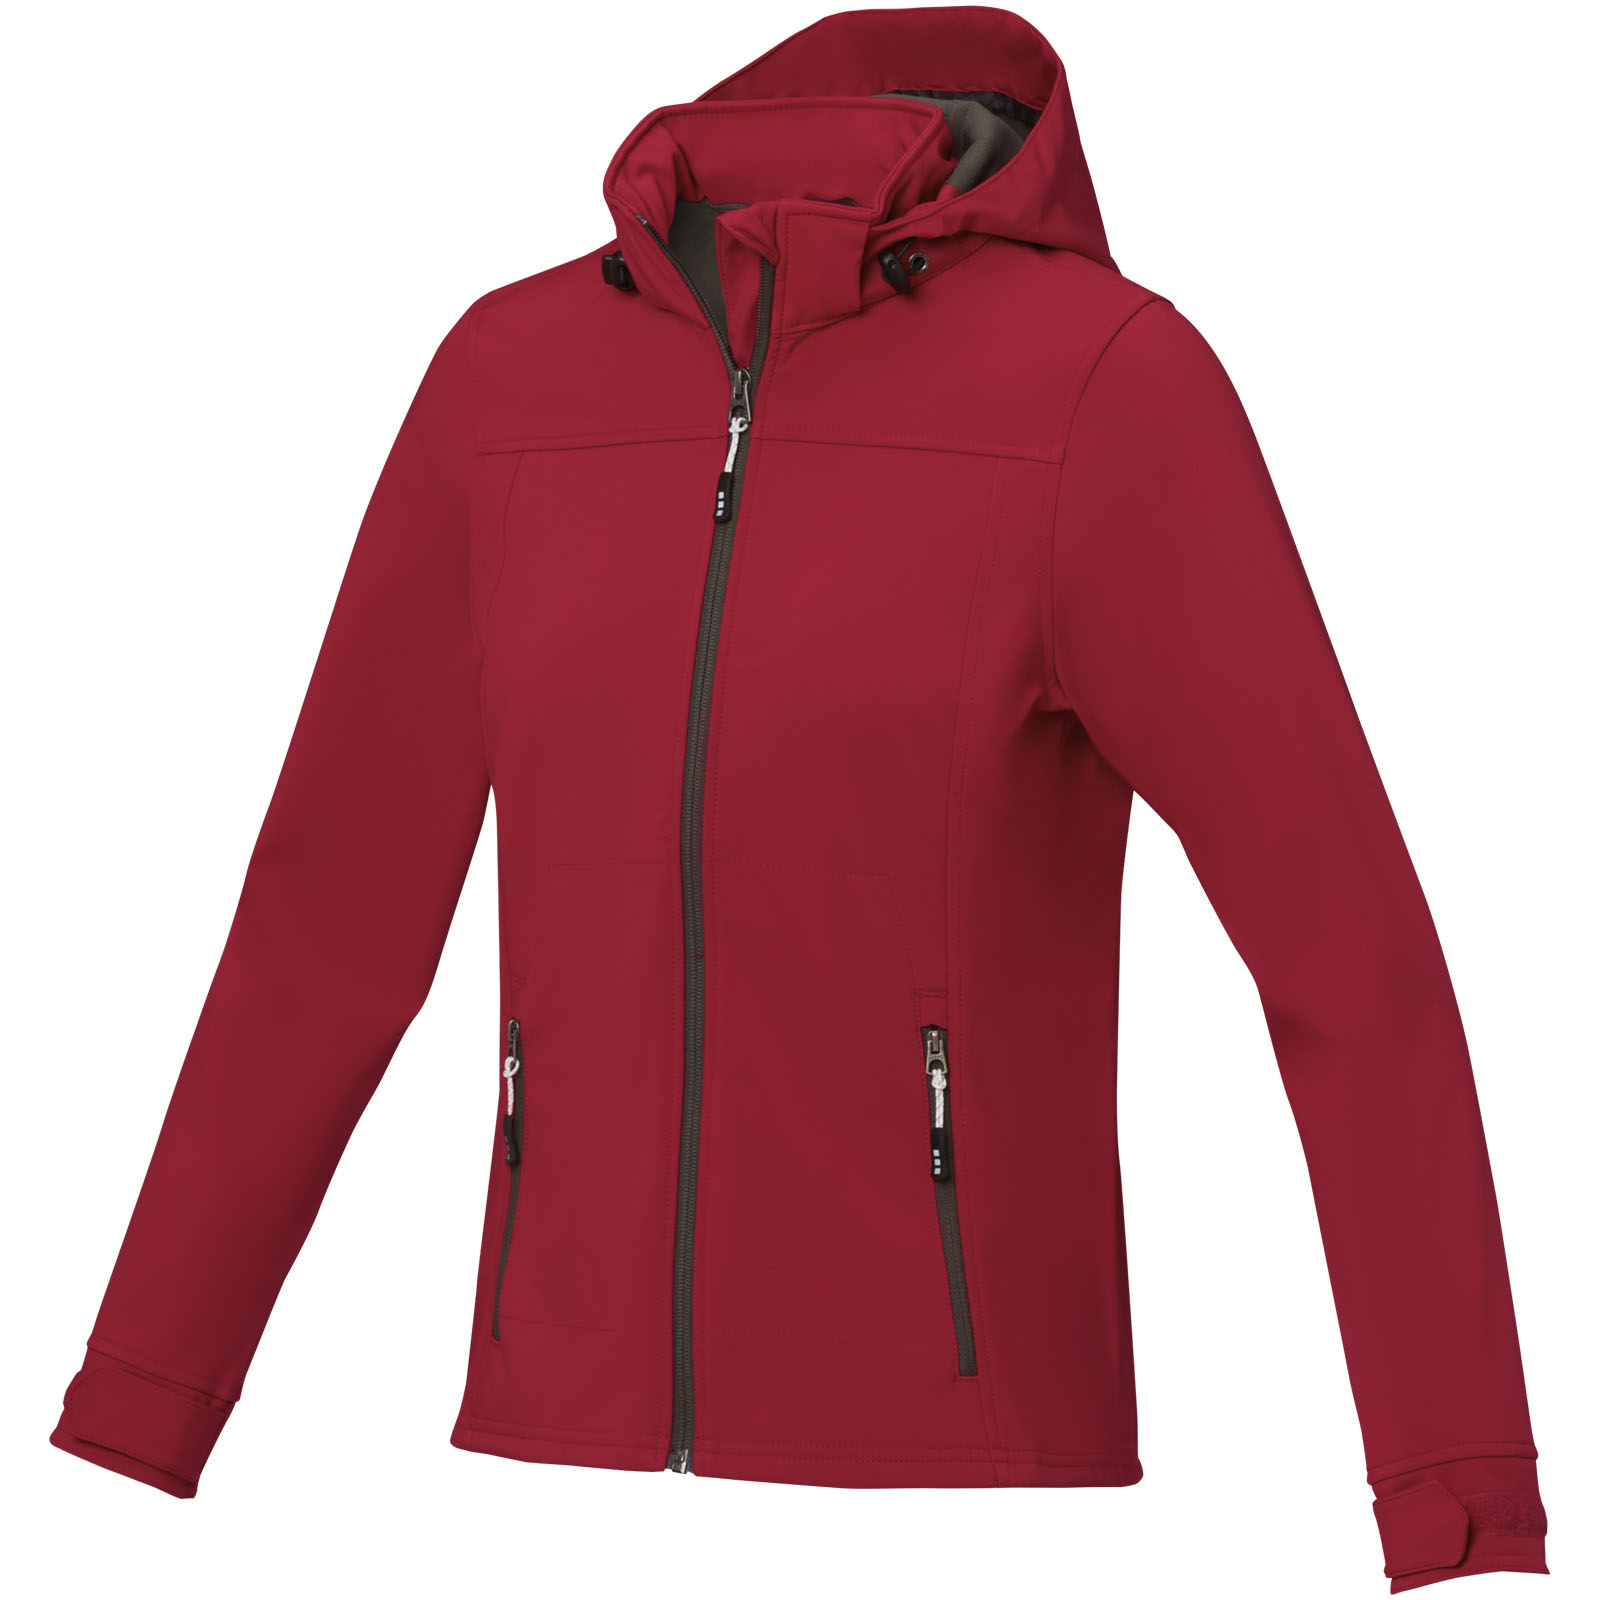 Clothing - Langley women's softshell jacket